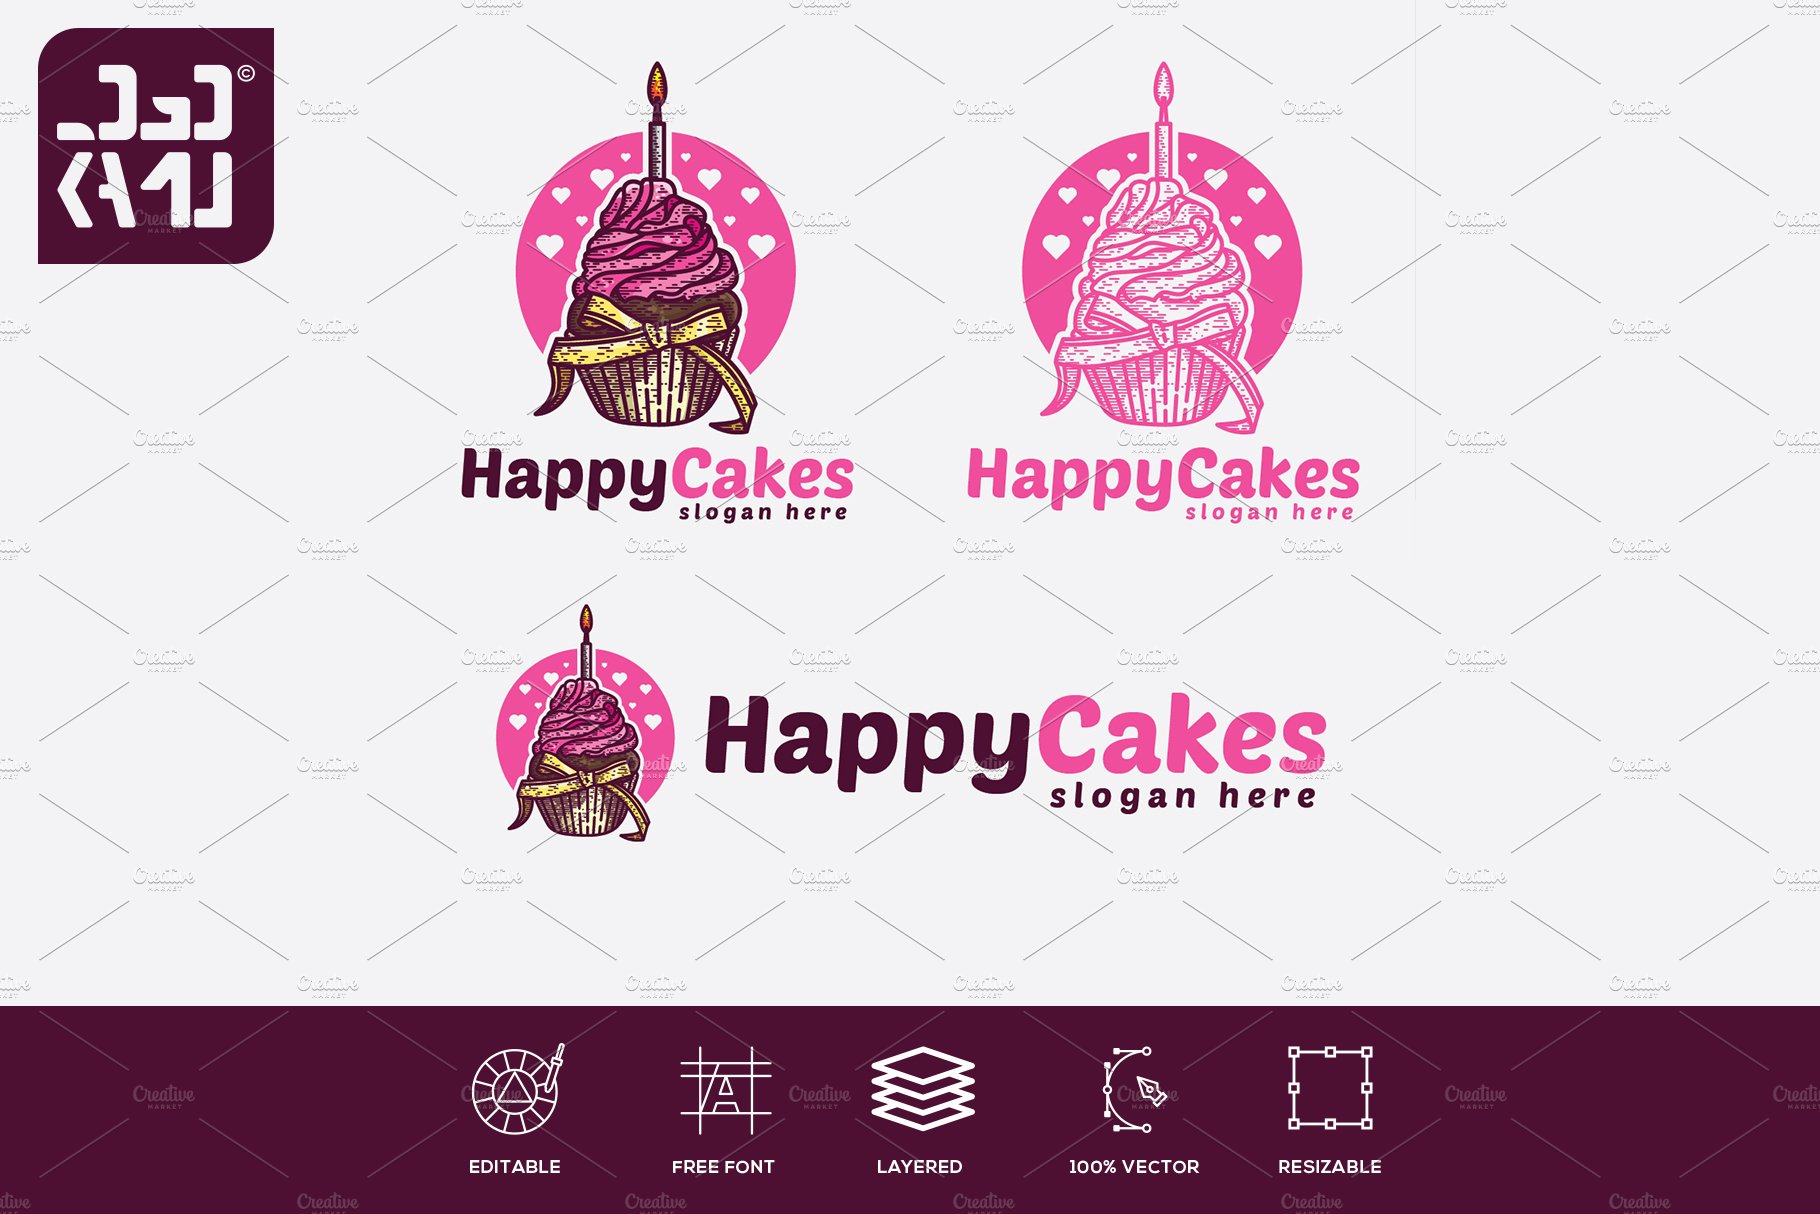 Happy Cakes Logo cover image.